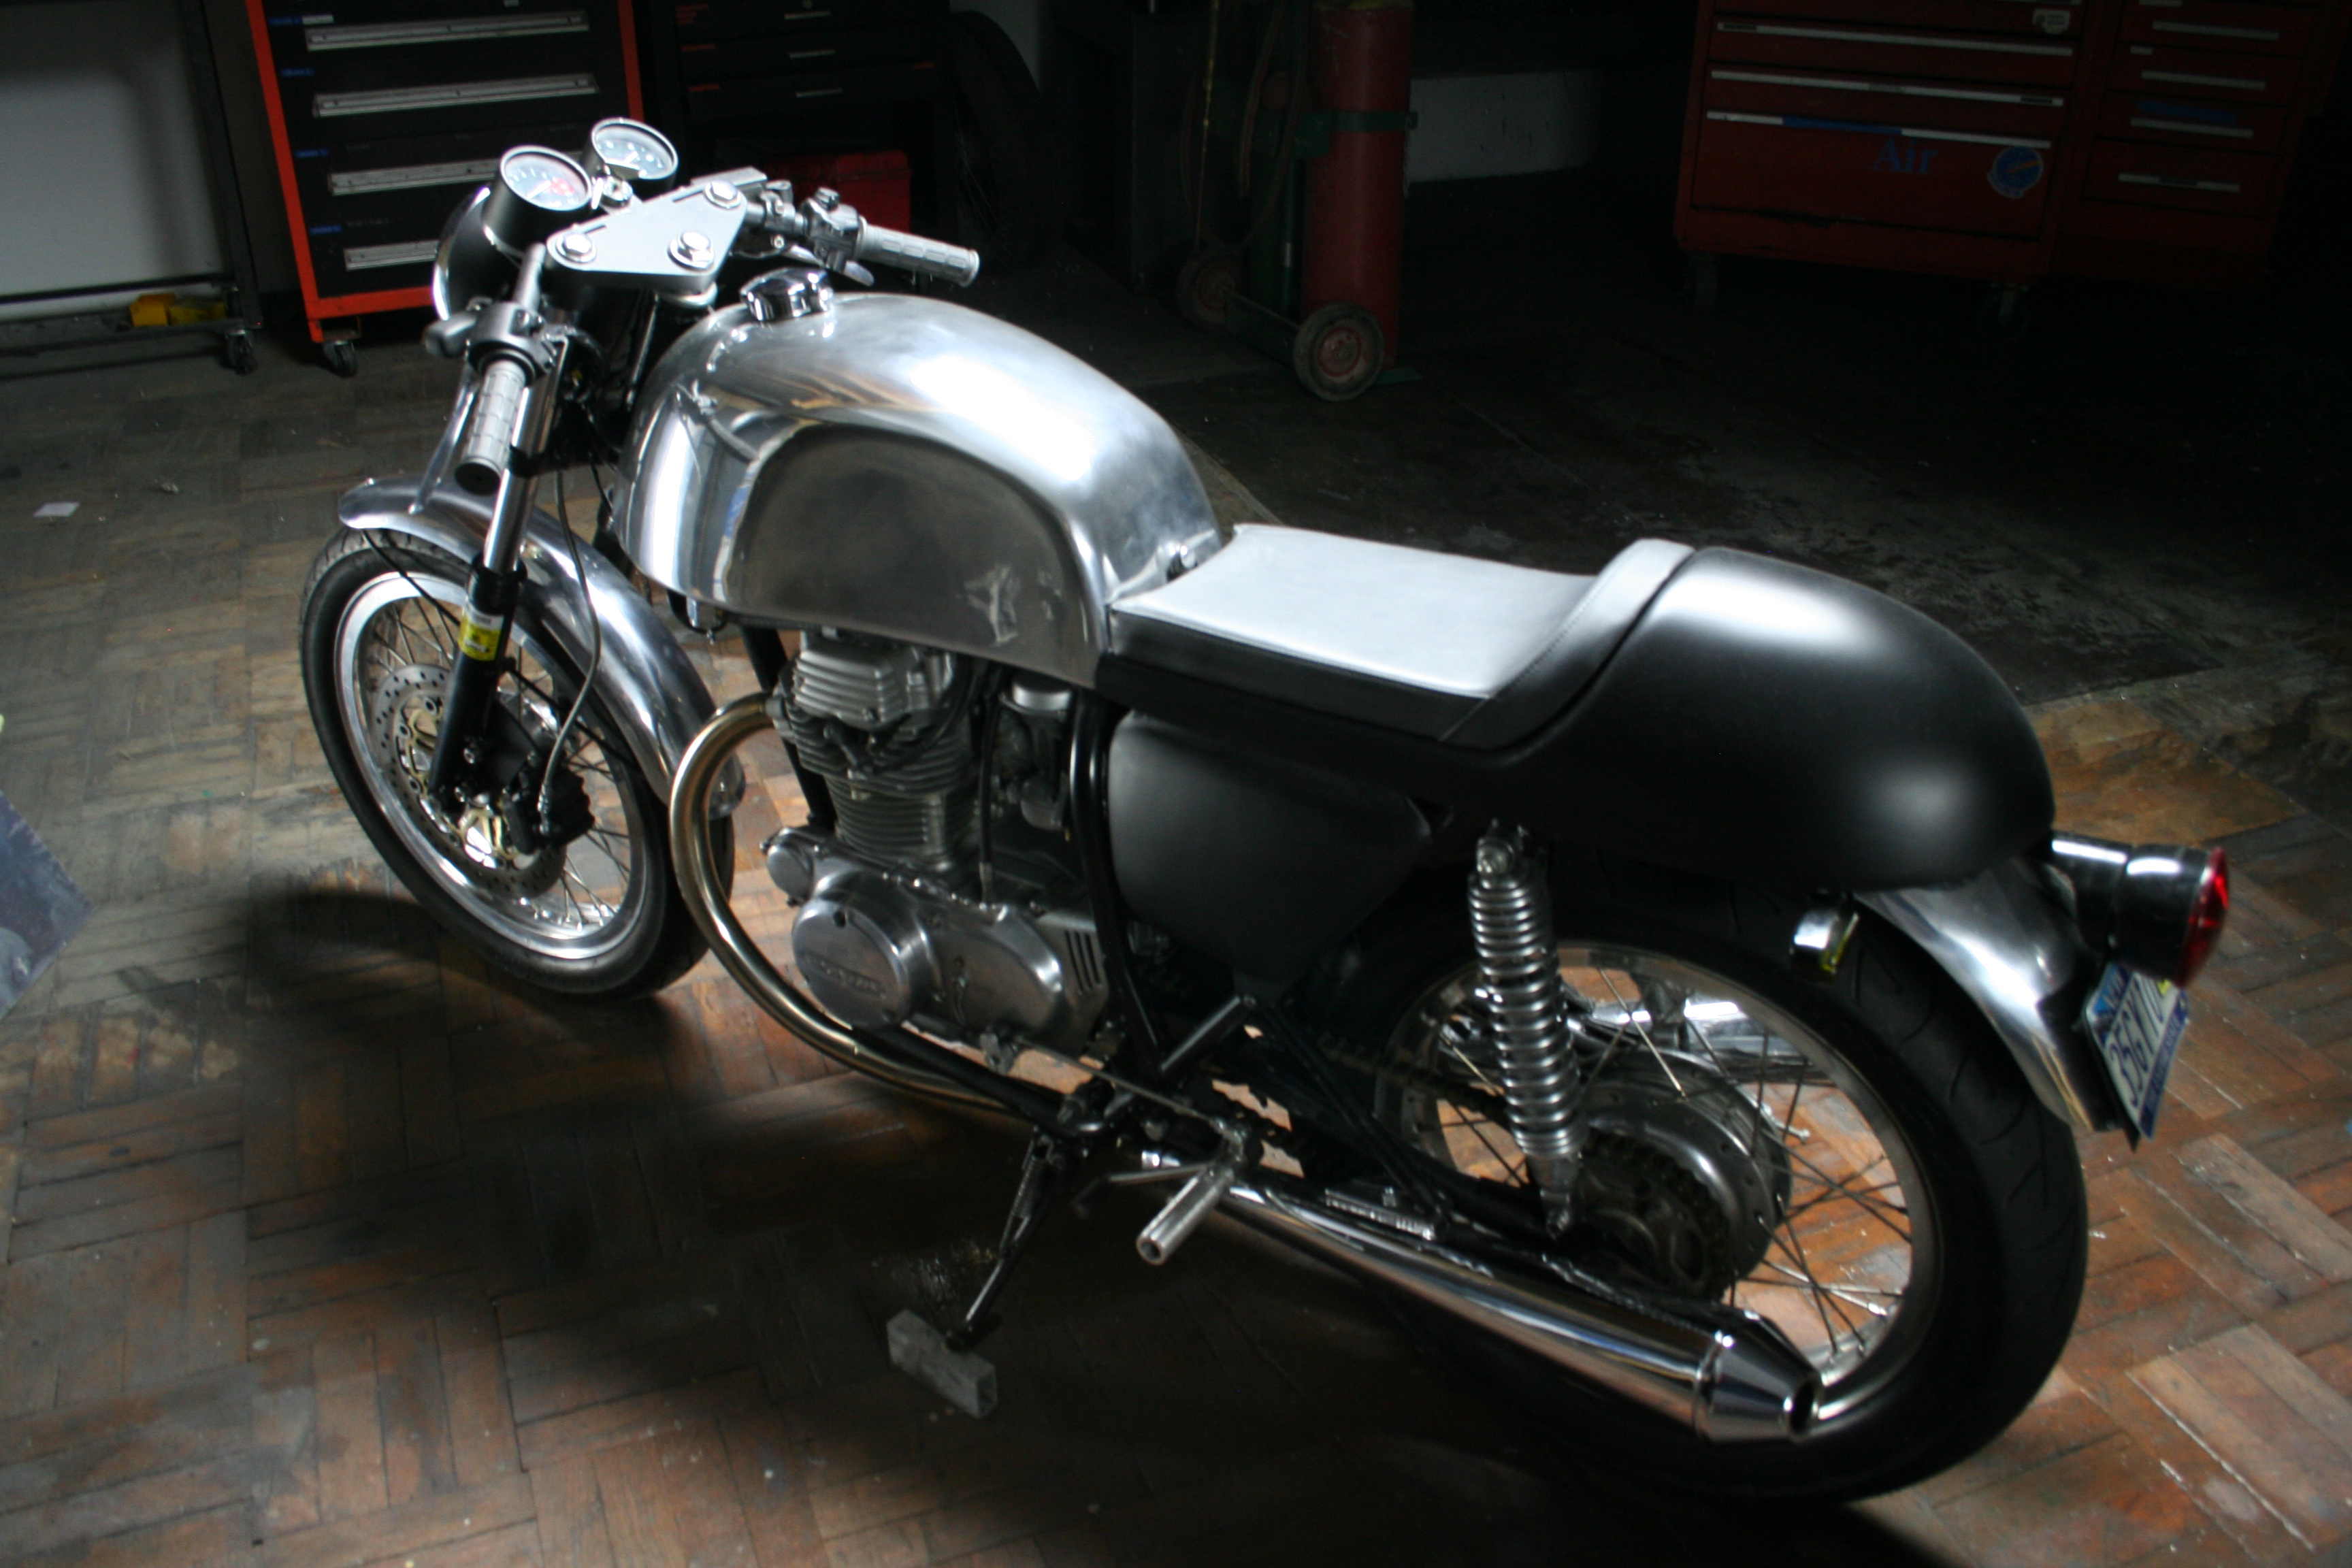 The MotoWorks Honda CB360